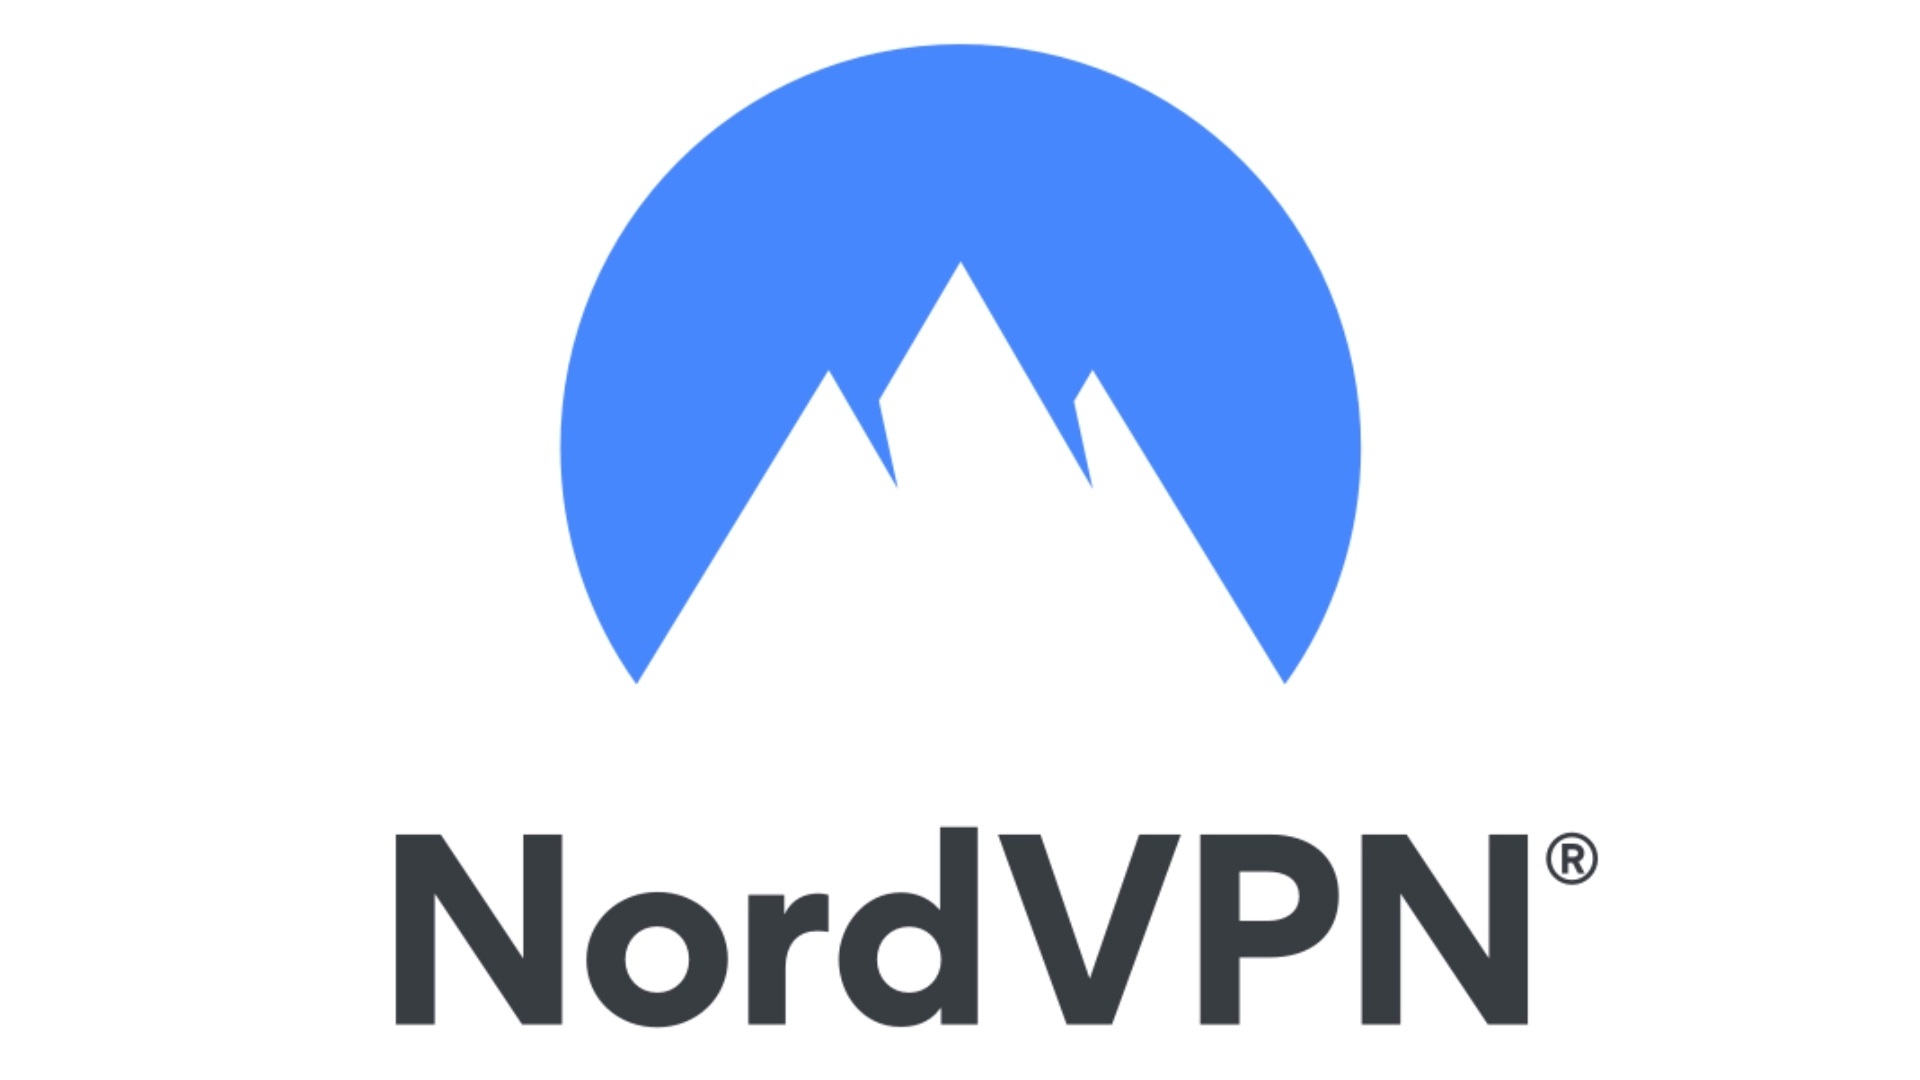 Best Chrome VPN: NordVPN. The image shows the company's logo.